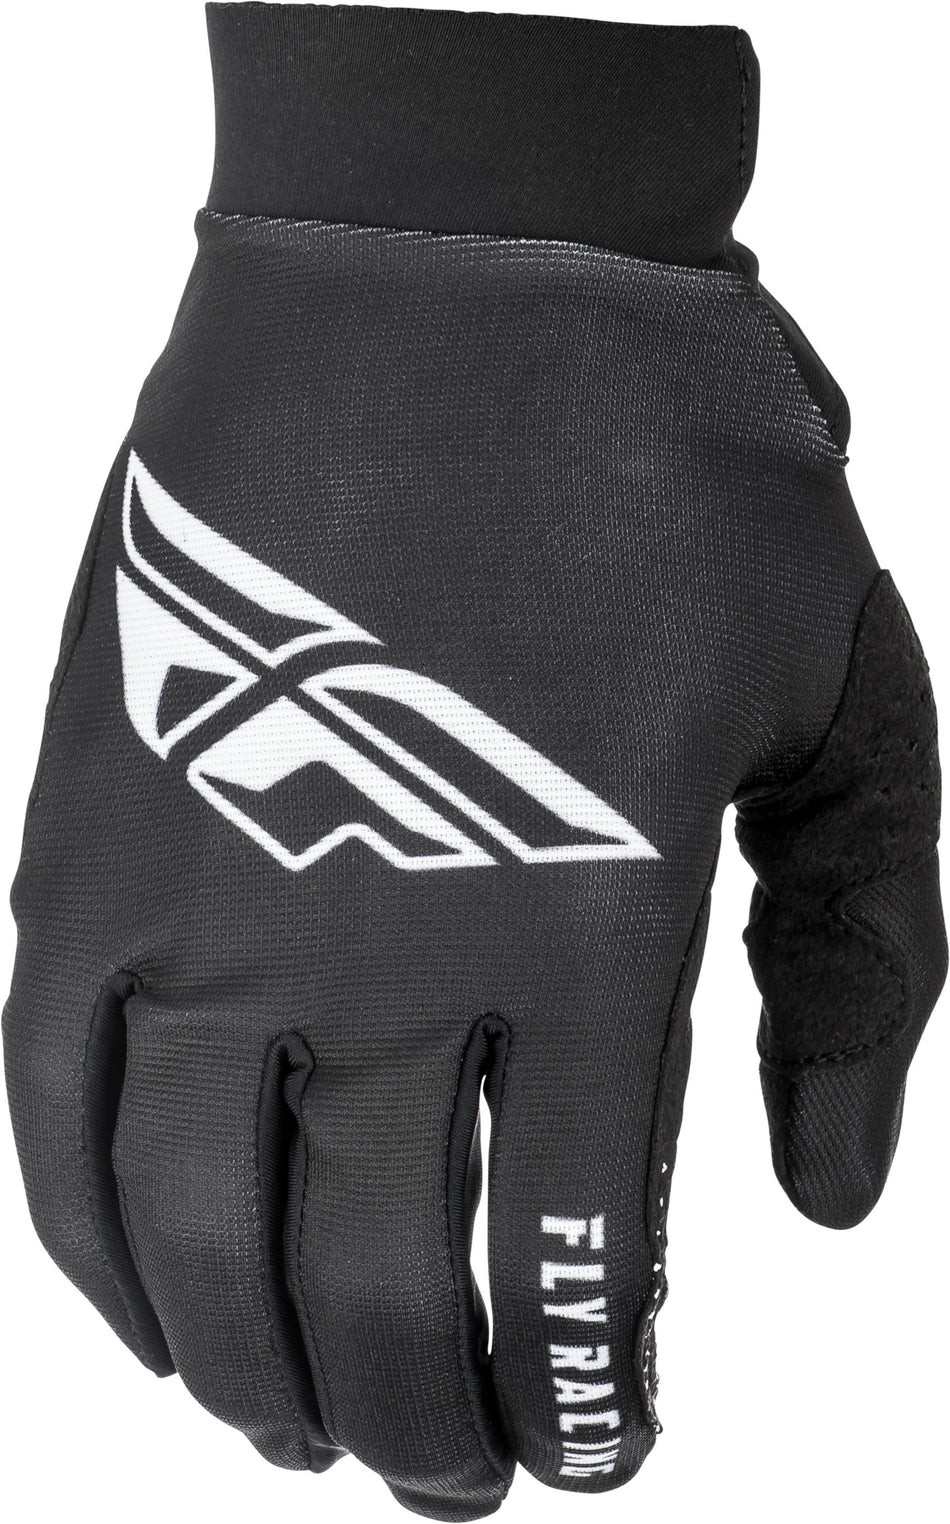 FLY RACING Pro Lite Gloves Black/White Sz 12 372-81012